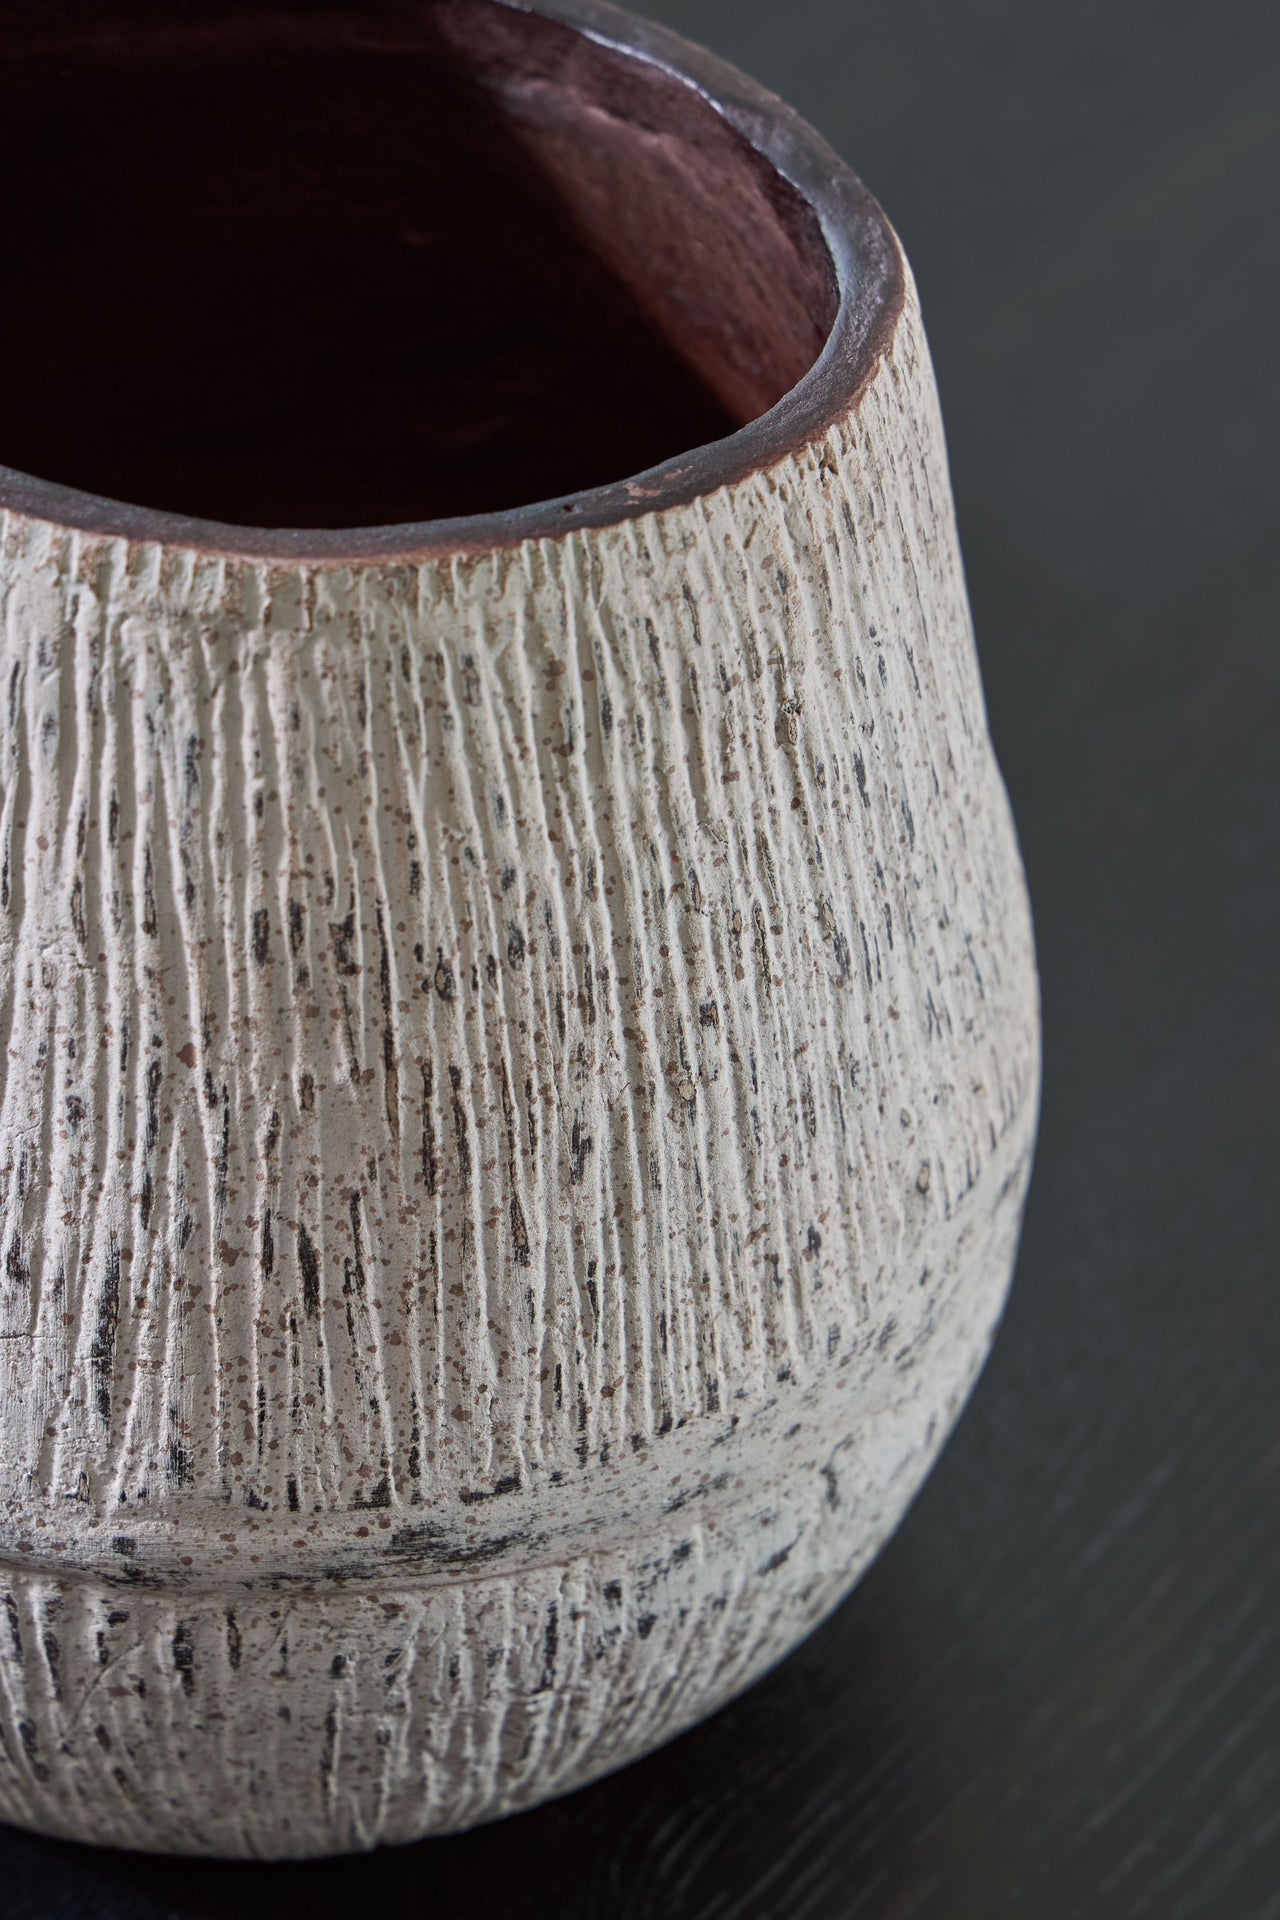 Claymount - Vase - Tony's Home Furnishings